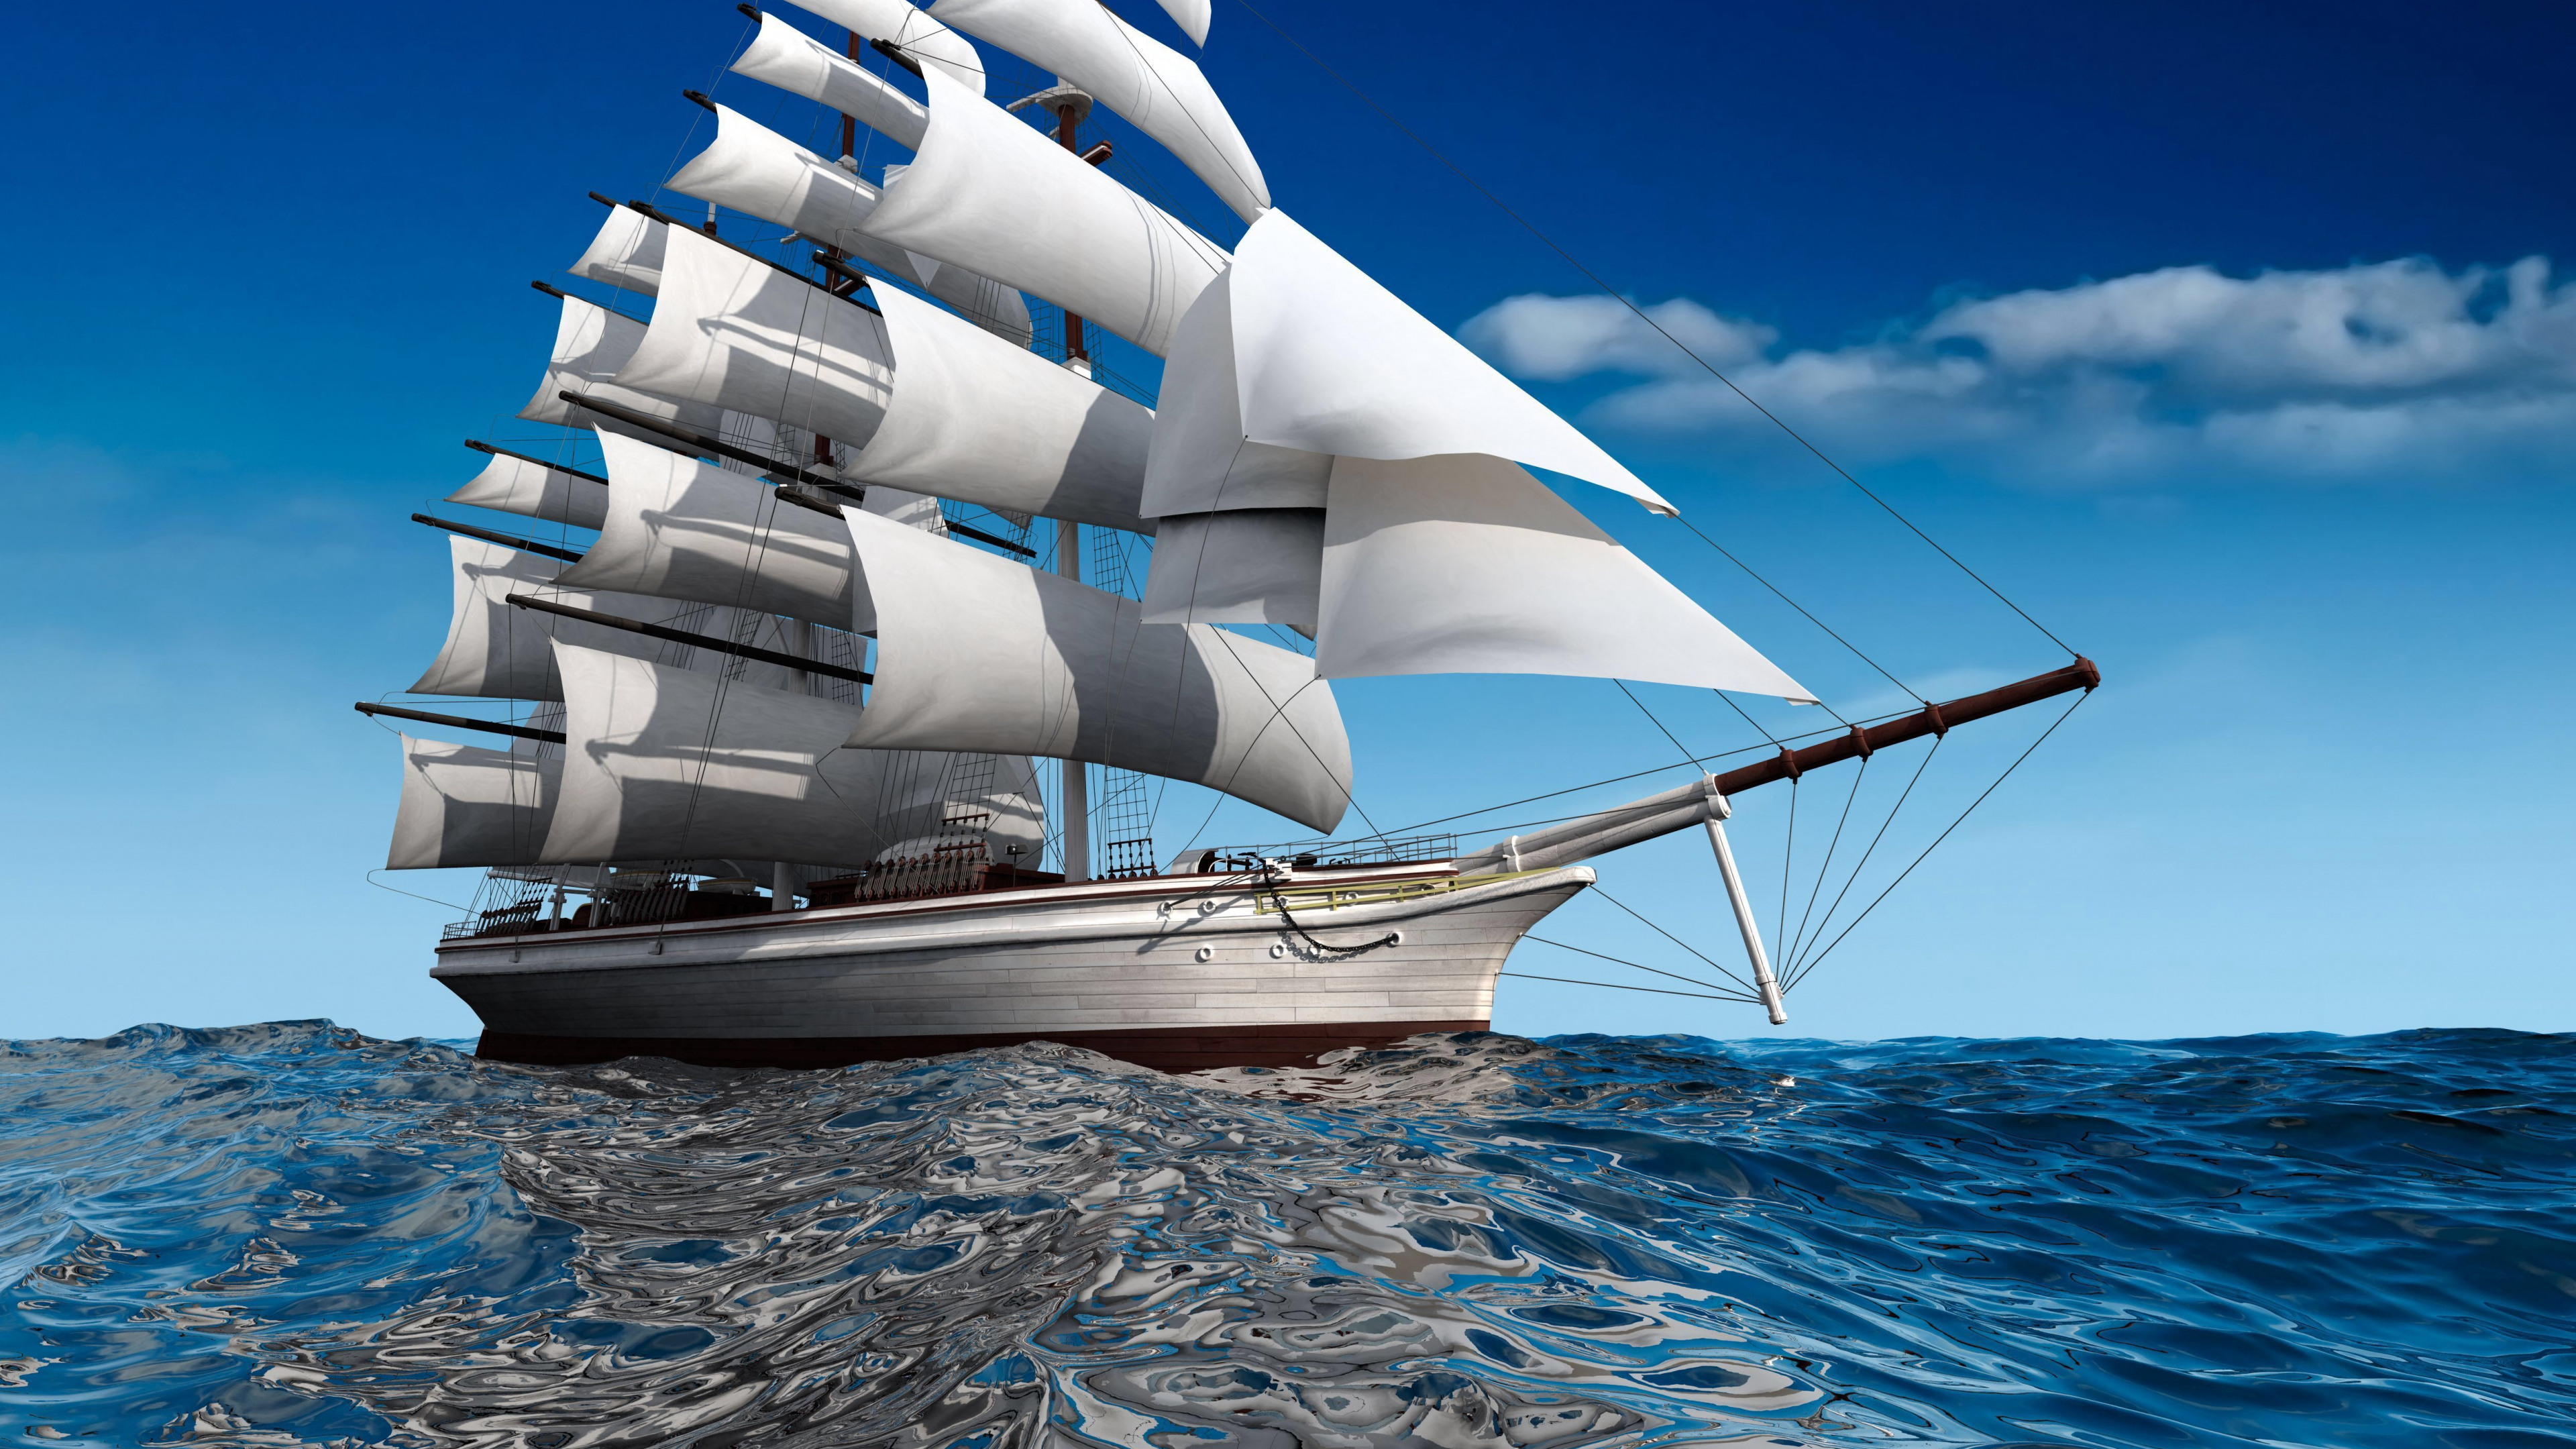 Windjammer: A sailing ship, Multiple masts that may be square rigged. 3840x2160 4K Wallpaper.